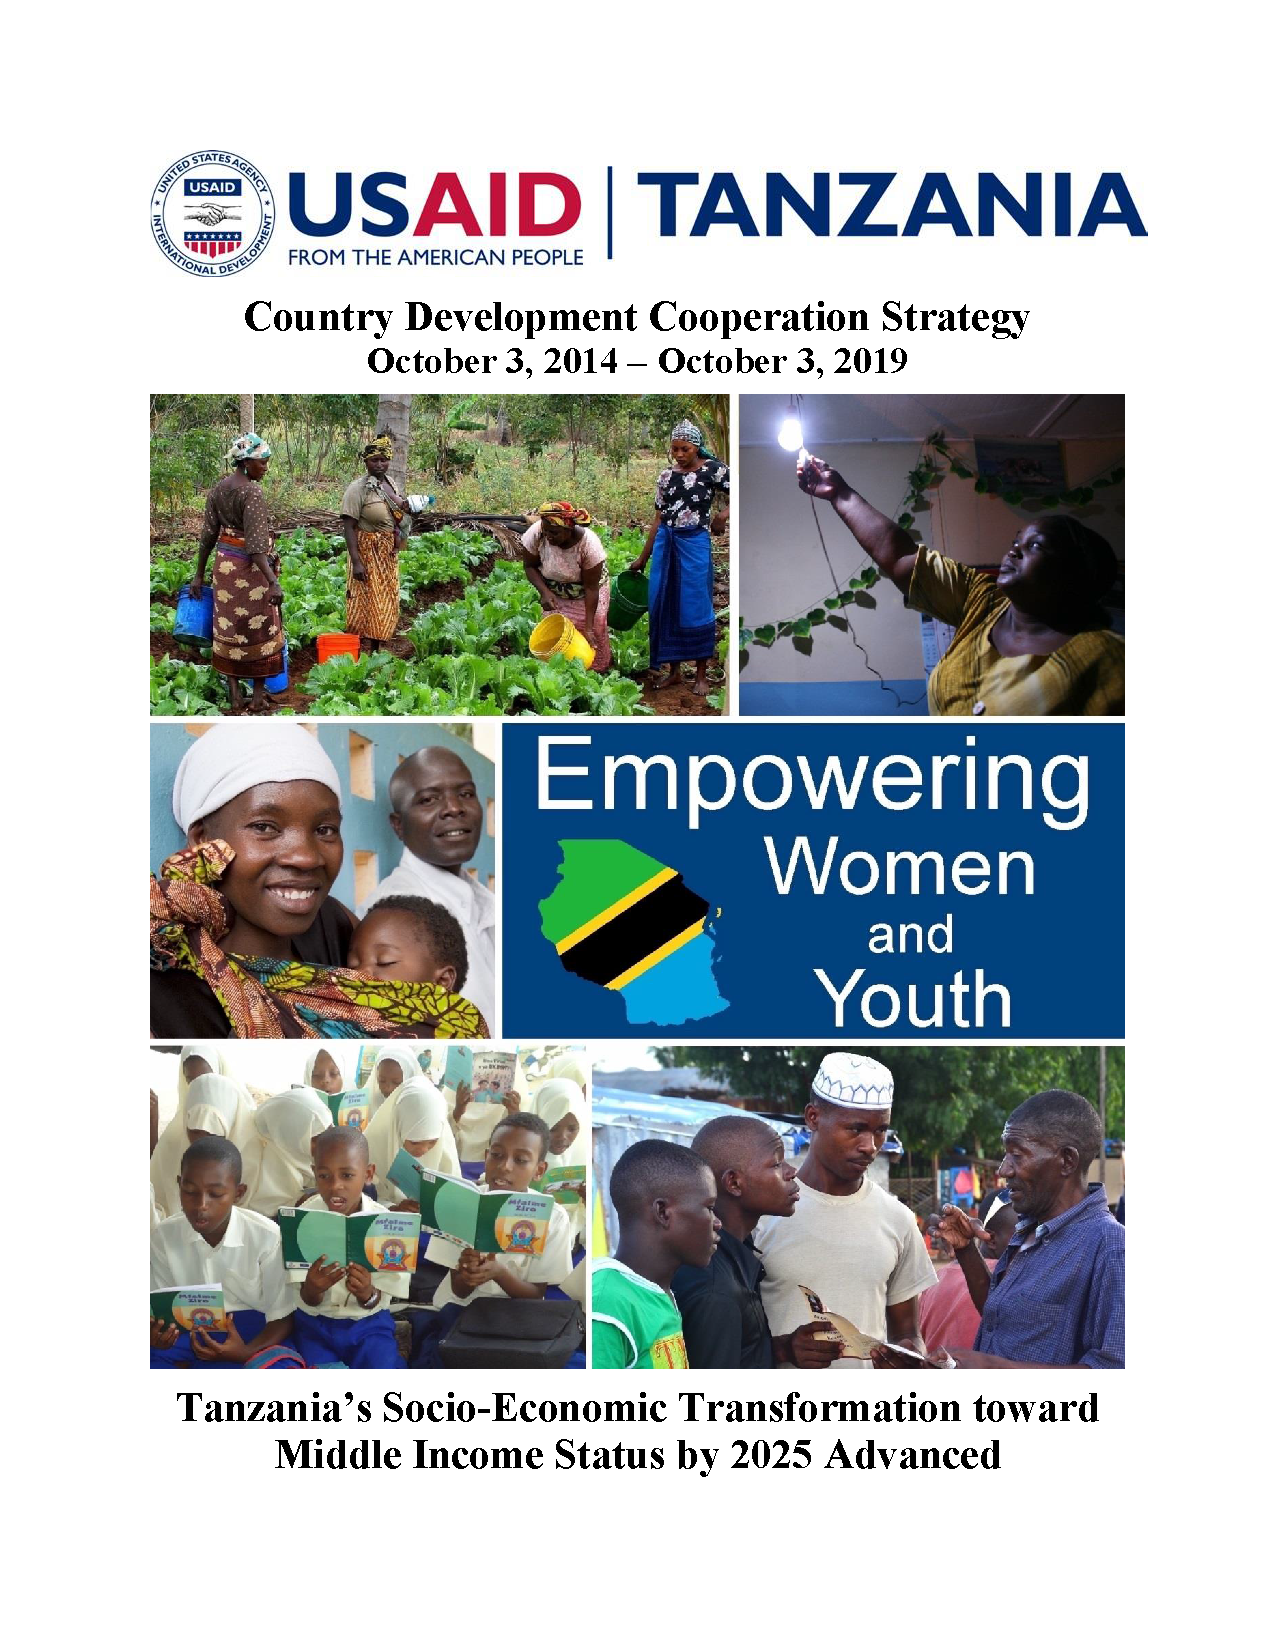 USAID Tanzaia CDCS